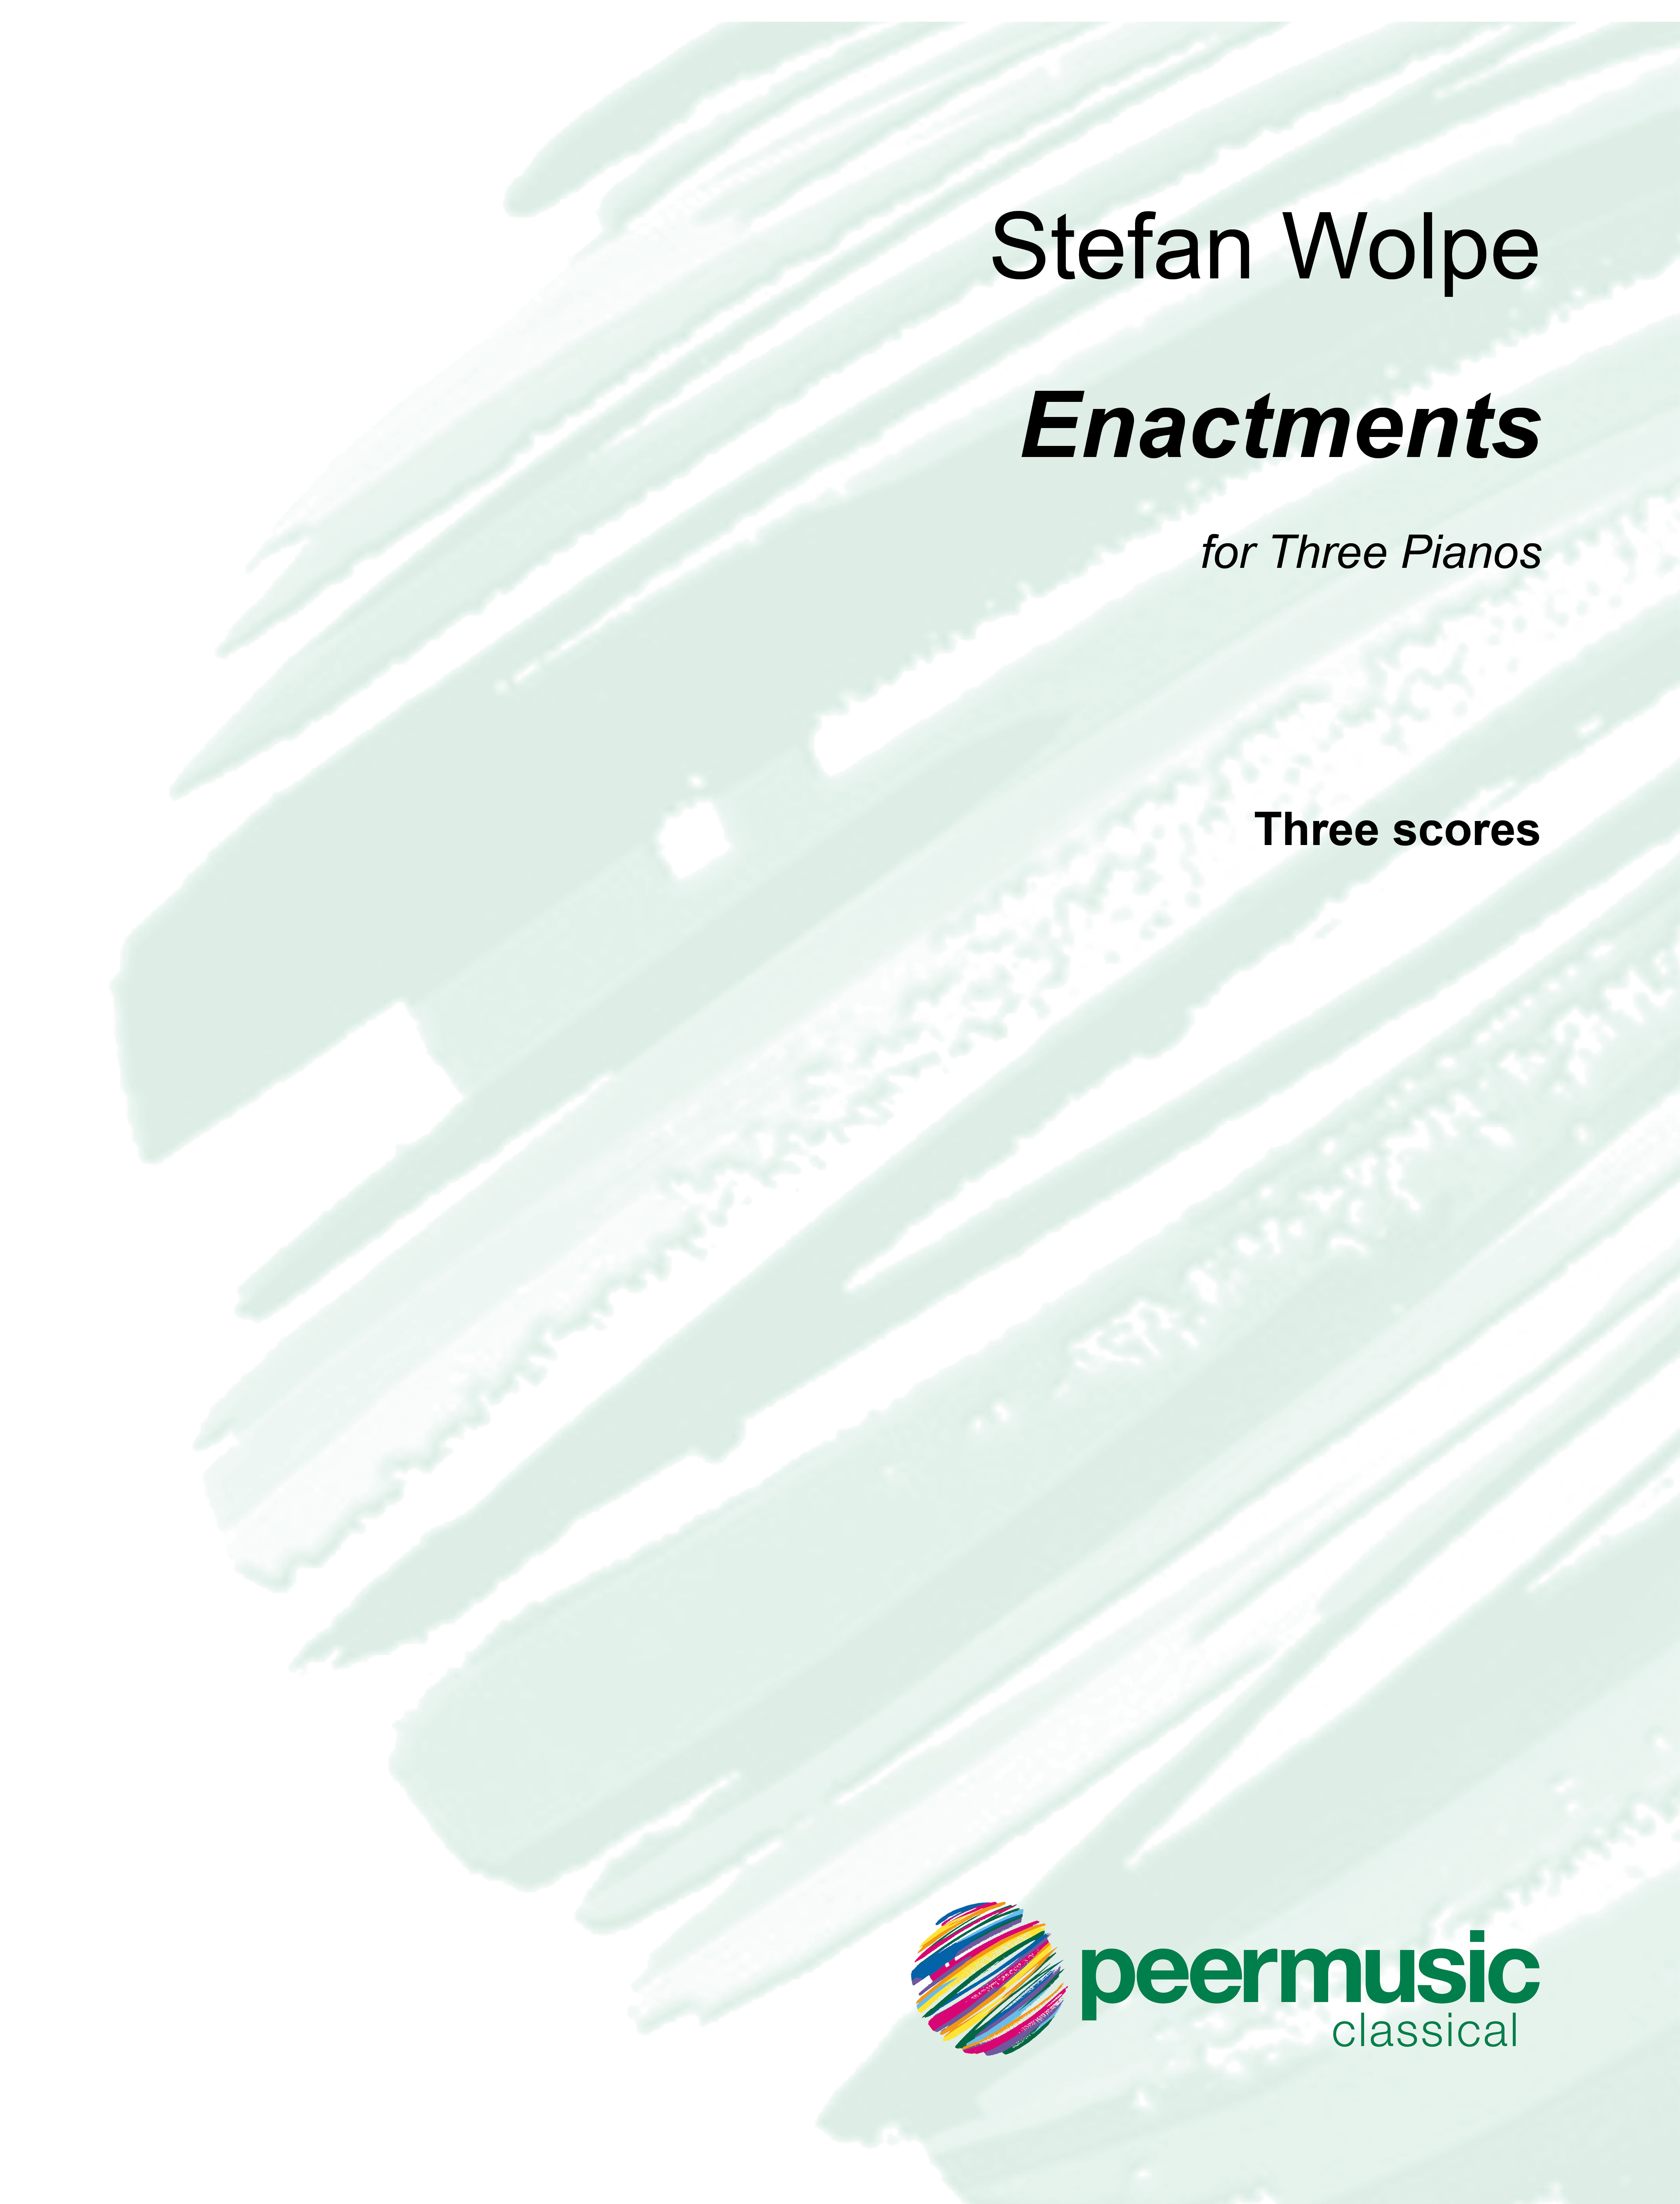 Enactments  for 3 pianos  3 scores